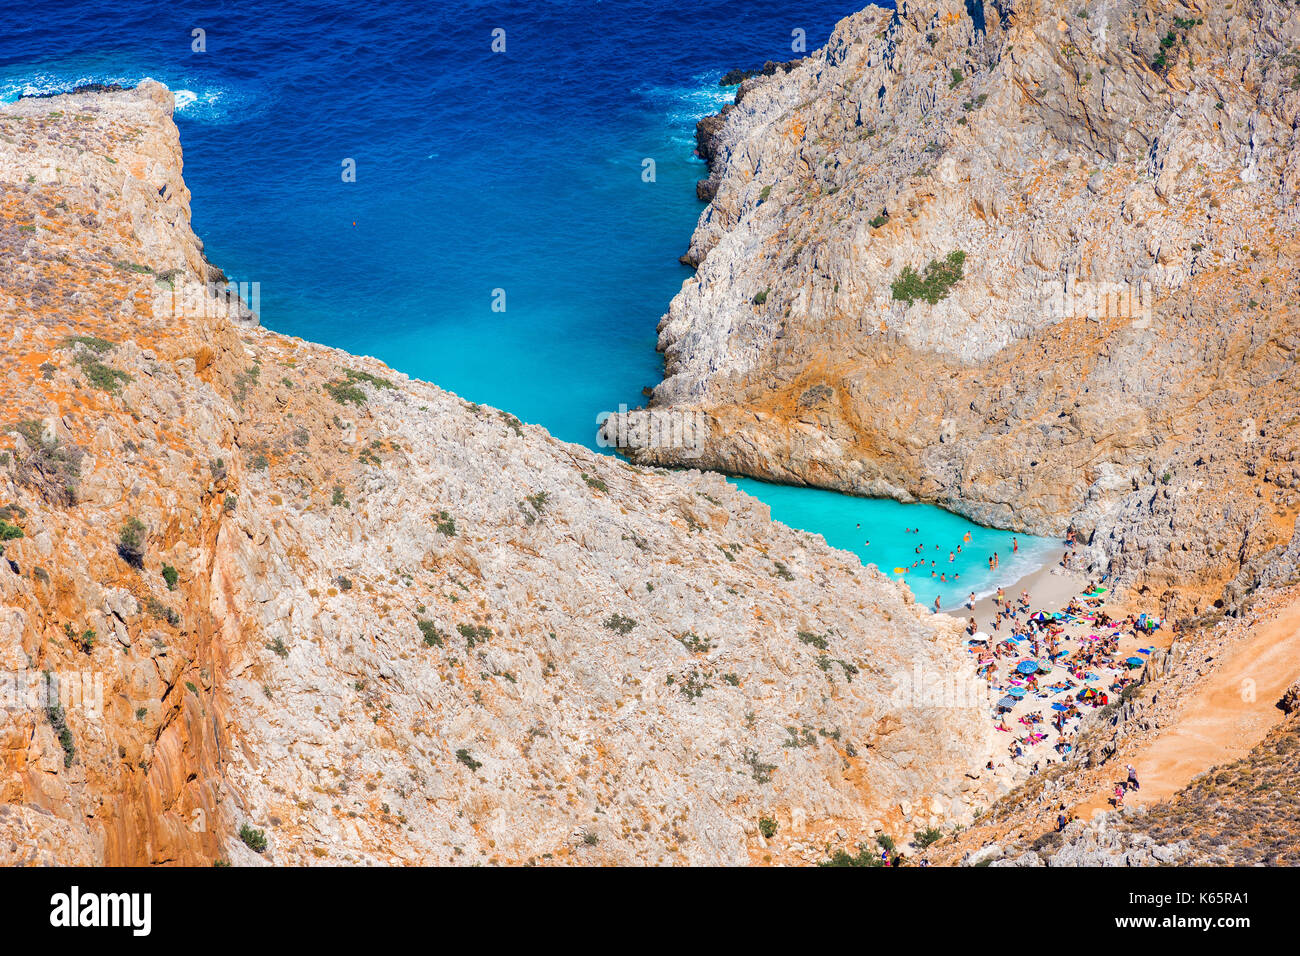 Seitán limania o agiou stefanou, la paradisíaca playa de aguas turquesa. Chania, Akrotiri, Creta, Grecia. Foto de stock